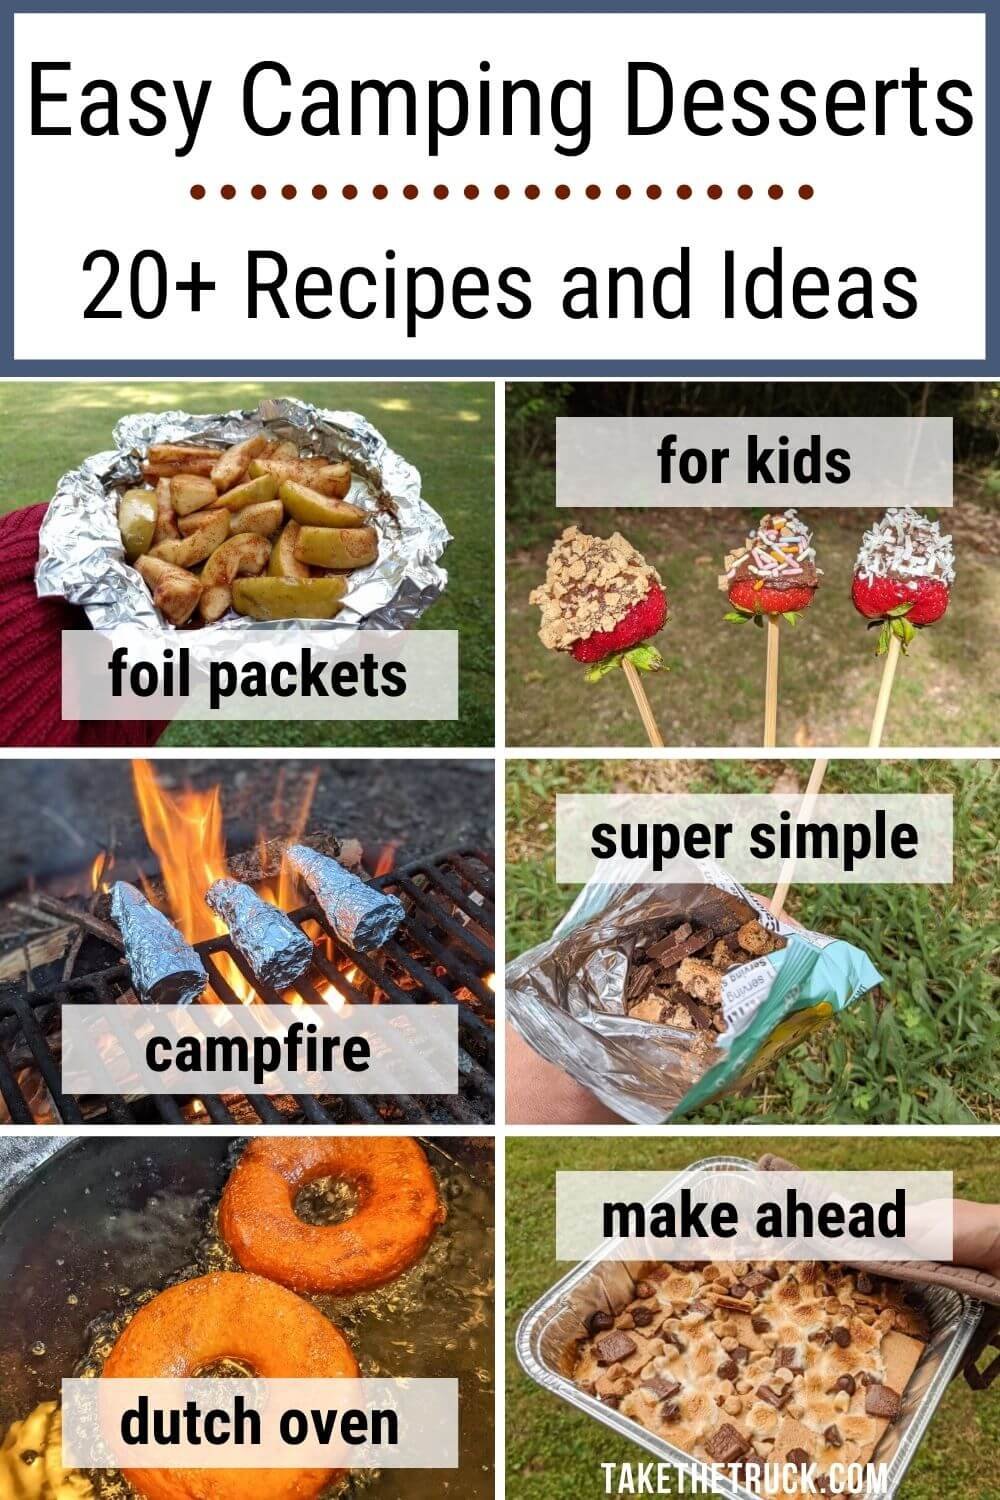  camping dessert recipes | camping dessert ideas | easy camping desserts | desserts for camping | dutch oven camping desserts | camping desserts campfire | camping desserts make ahead |